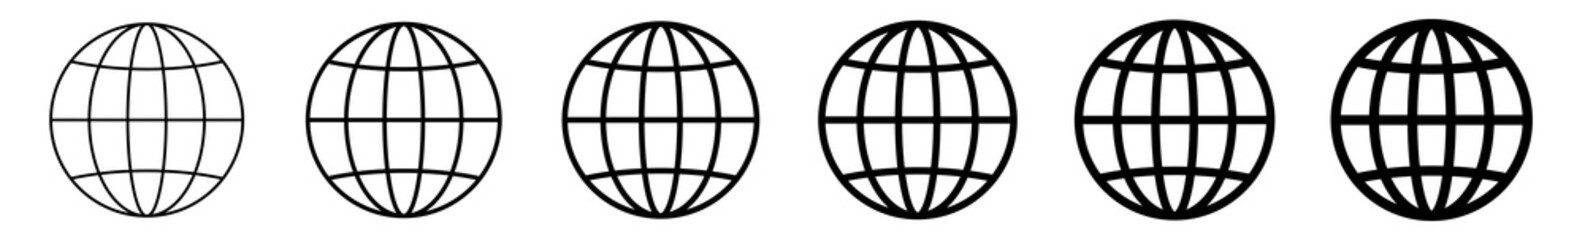 World Icon Black | Earth Illustration | Globe Symbol | Planet Logo | World Wide Web Sign | Isolated | Variations